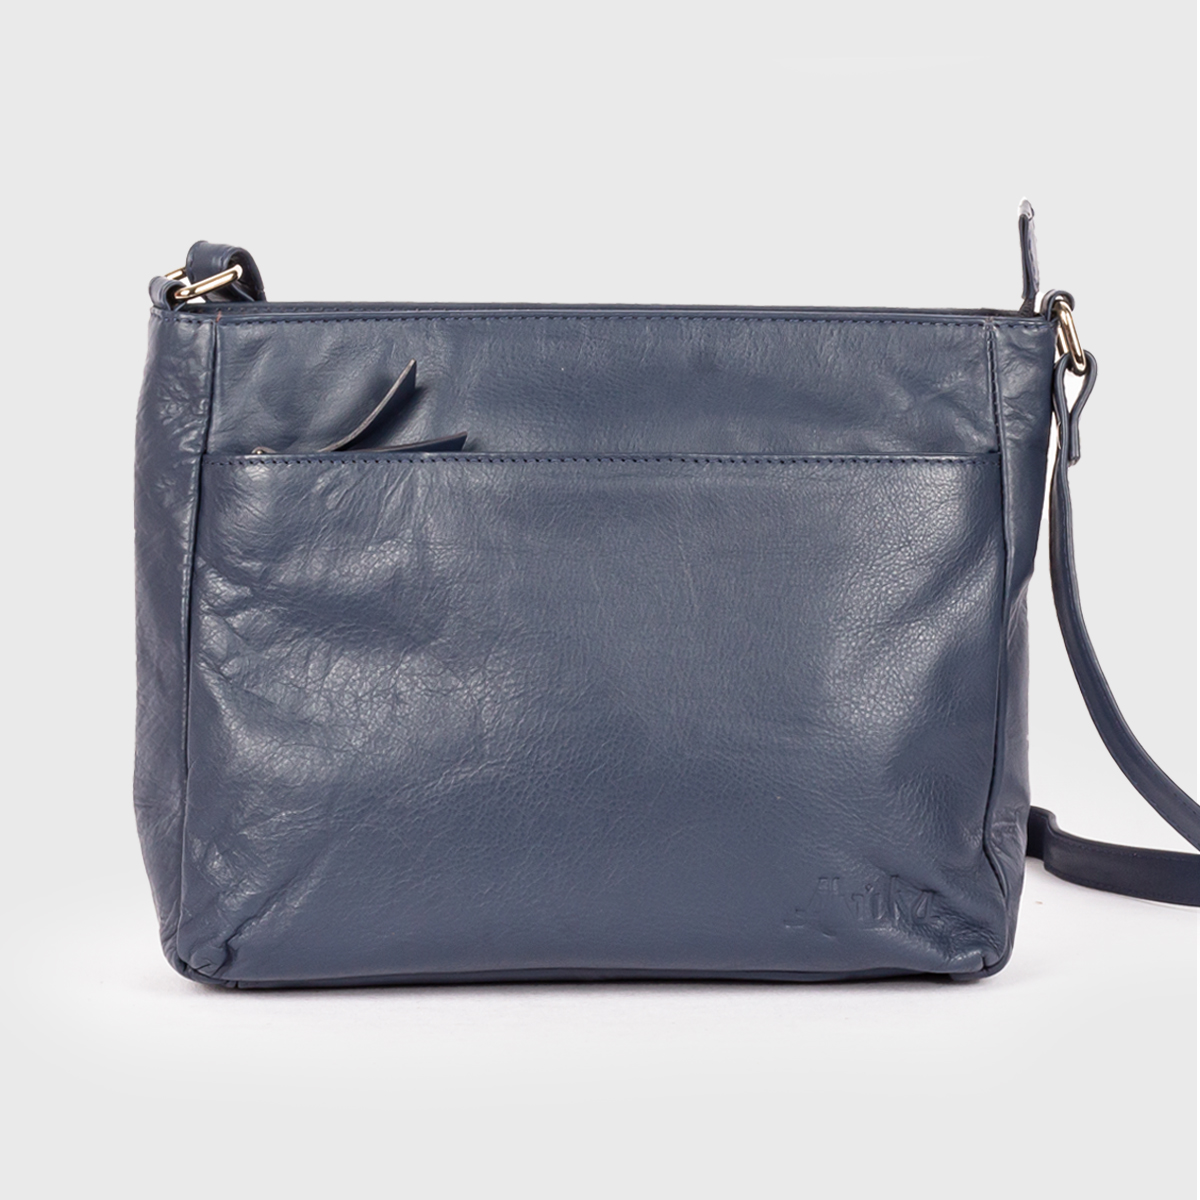 Classic genuine leather handbag for Women - Bags Basket